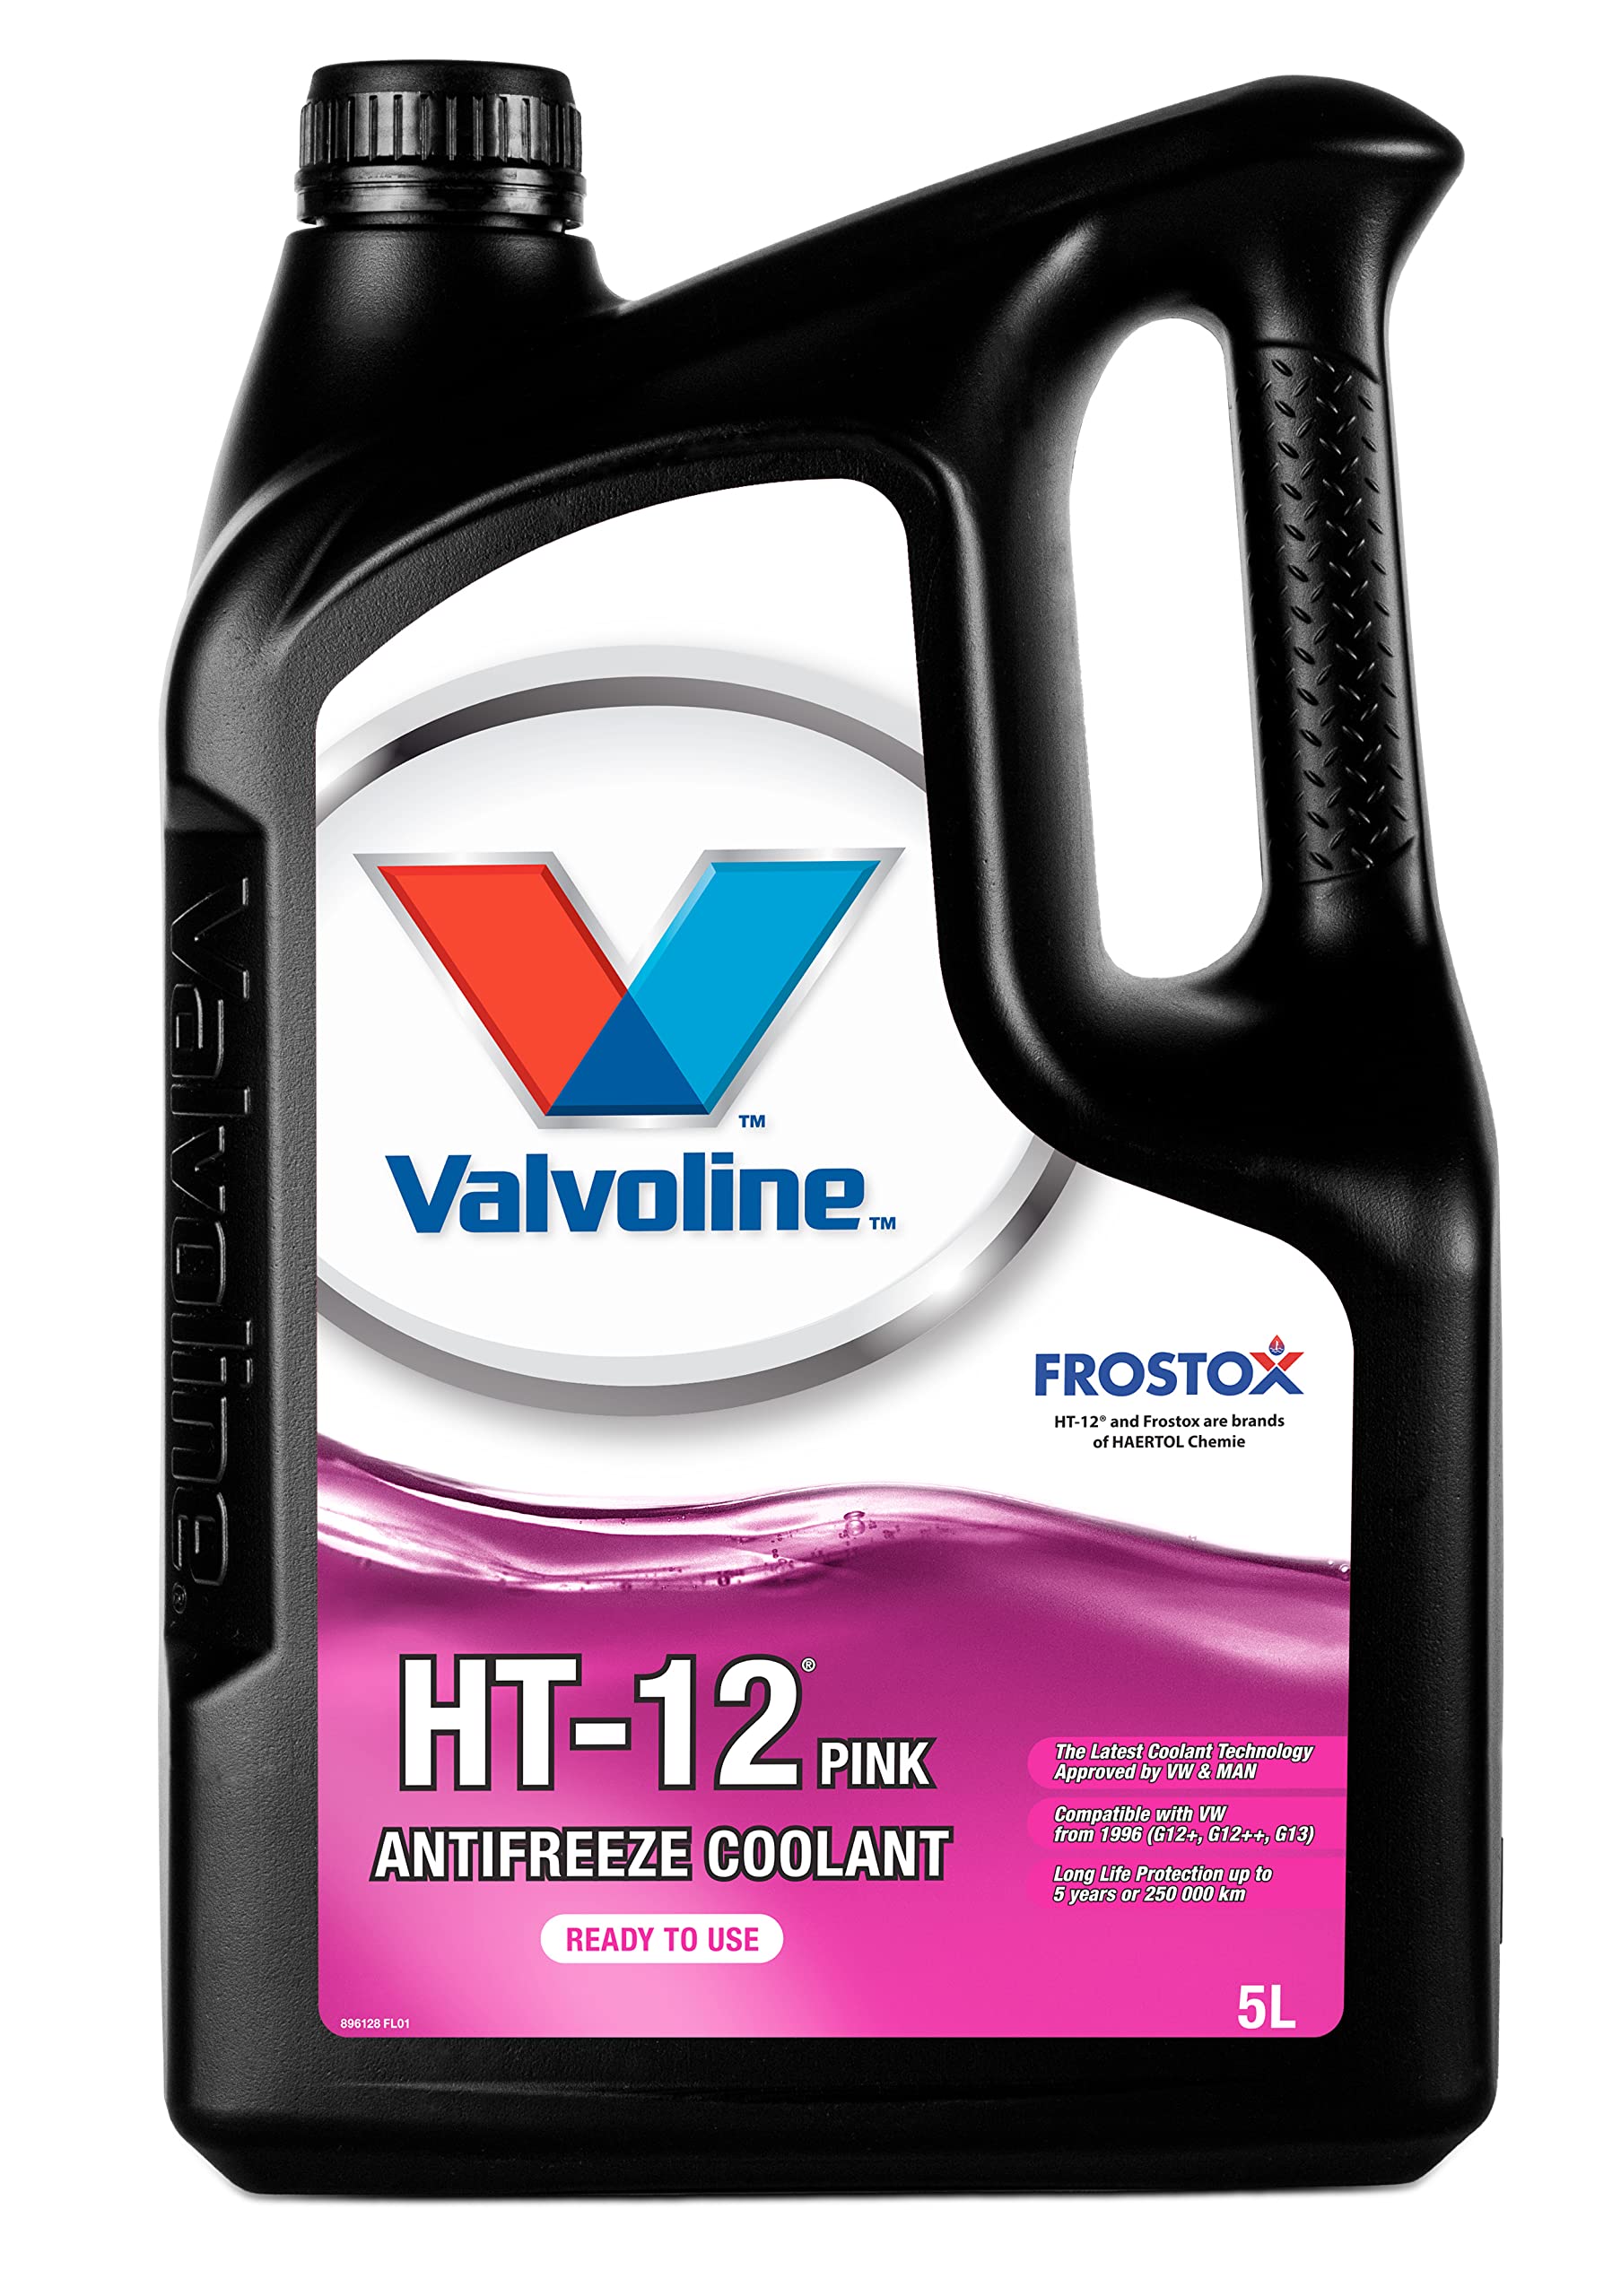 Valvoline Antifreeze Coolant HT-12 Pink Ready-to-Use, 5L von Valvoline